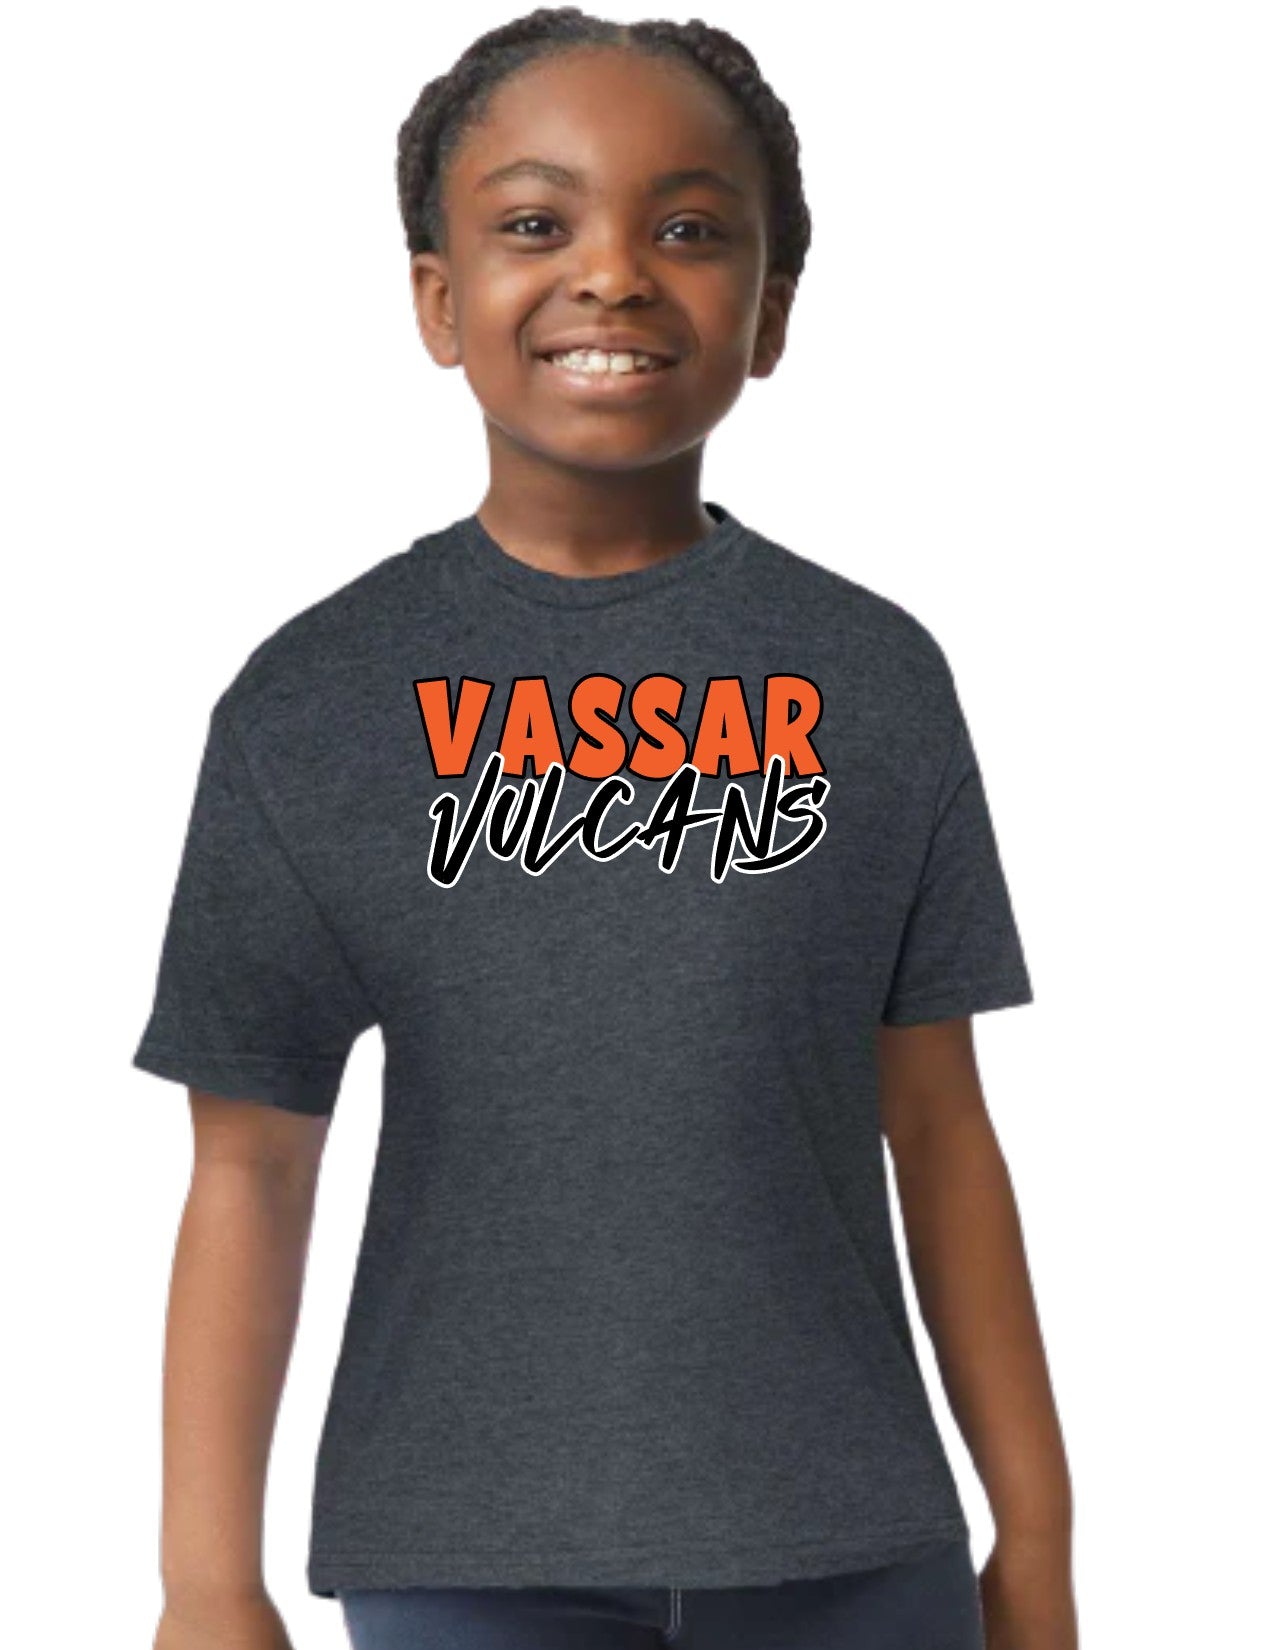 Vassar Vulcans Youth T-shirt